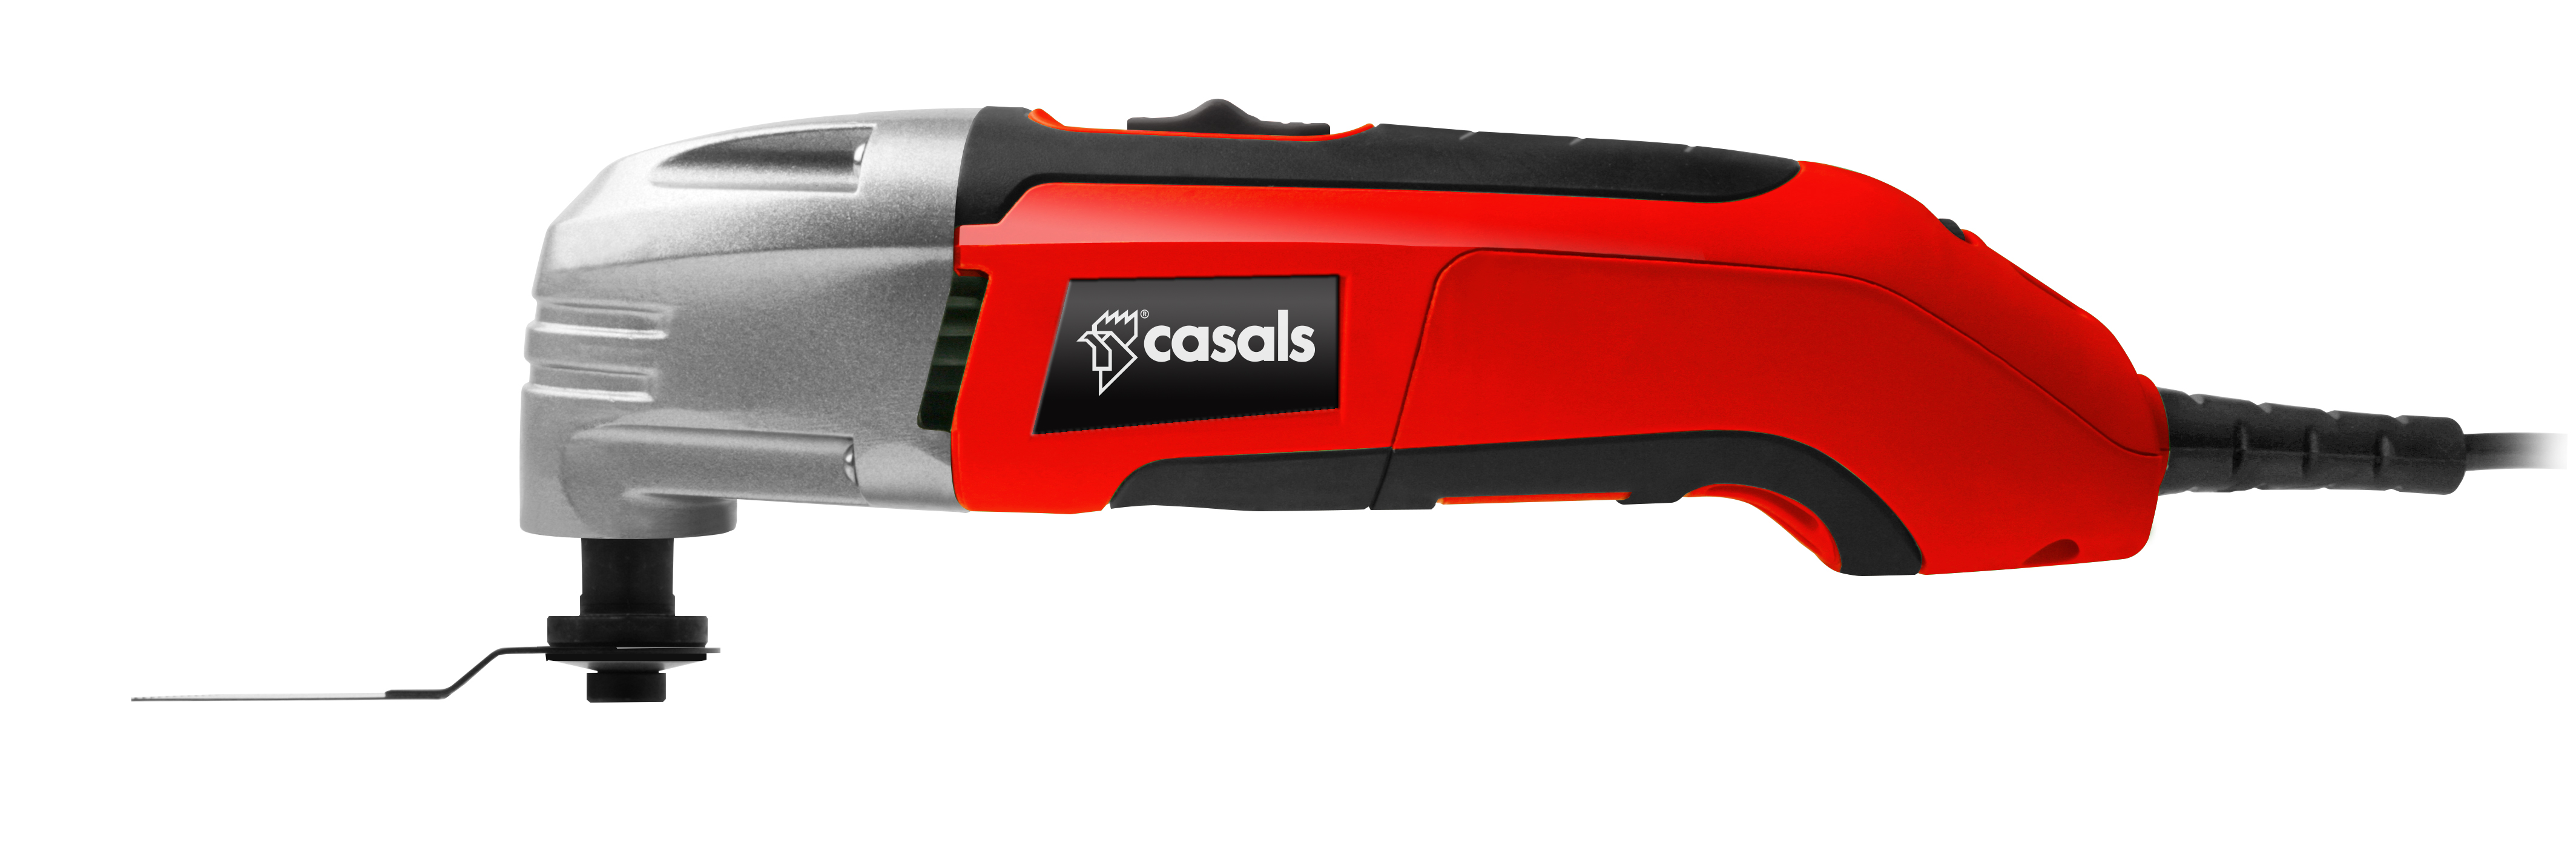 Casals Multi Function Tool Sander Cutter Plastic Red